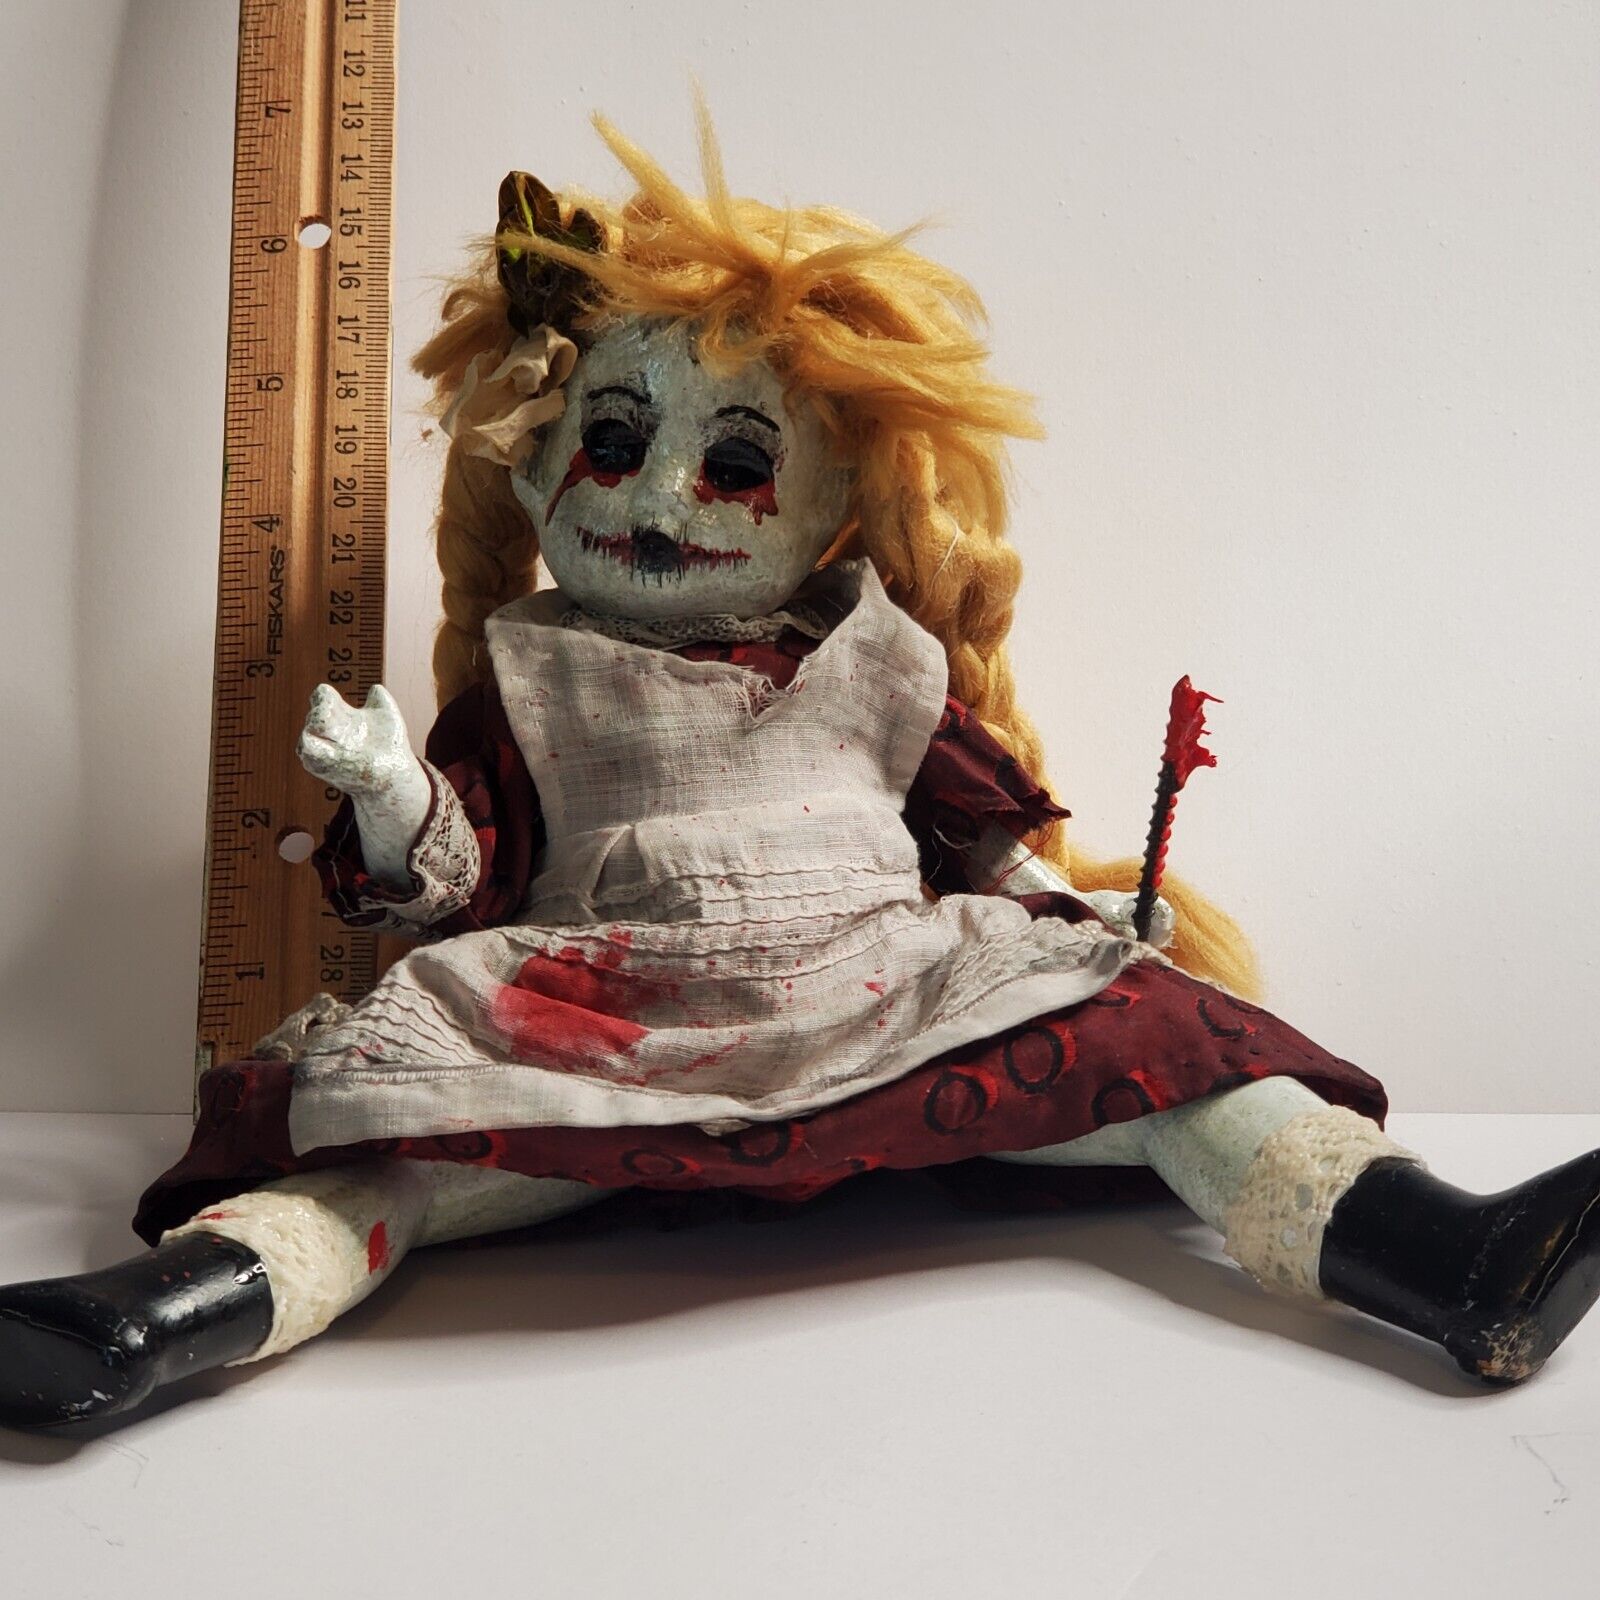 Artist Repaint Creepy Gothic Black Eyed Horror Art Doll 9.5